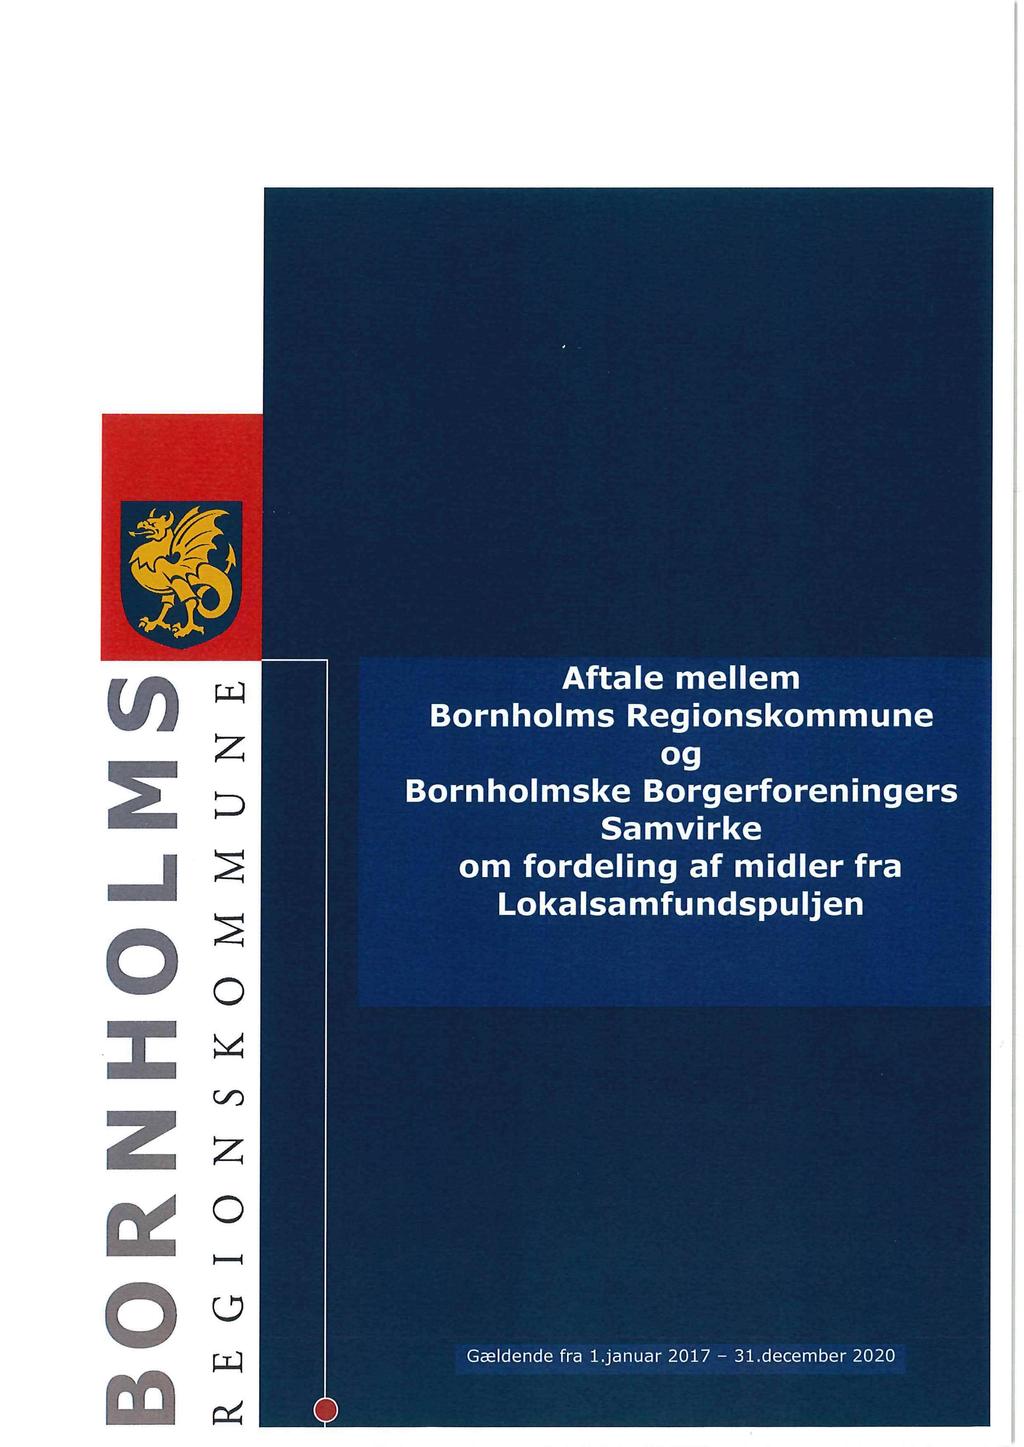 Aftale mellem Bornholms Regionskommune og Bornholmske Borgerforeningers Samvirke om